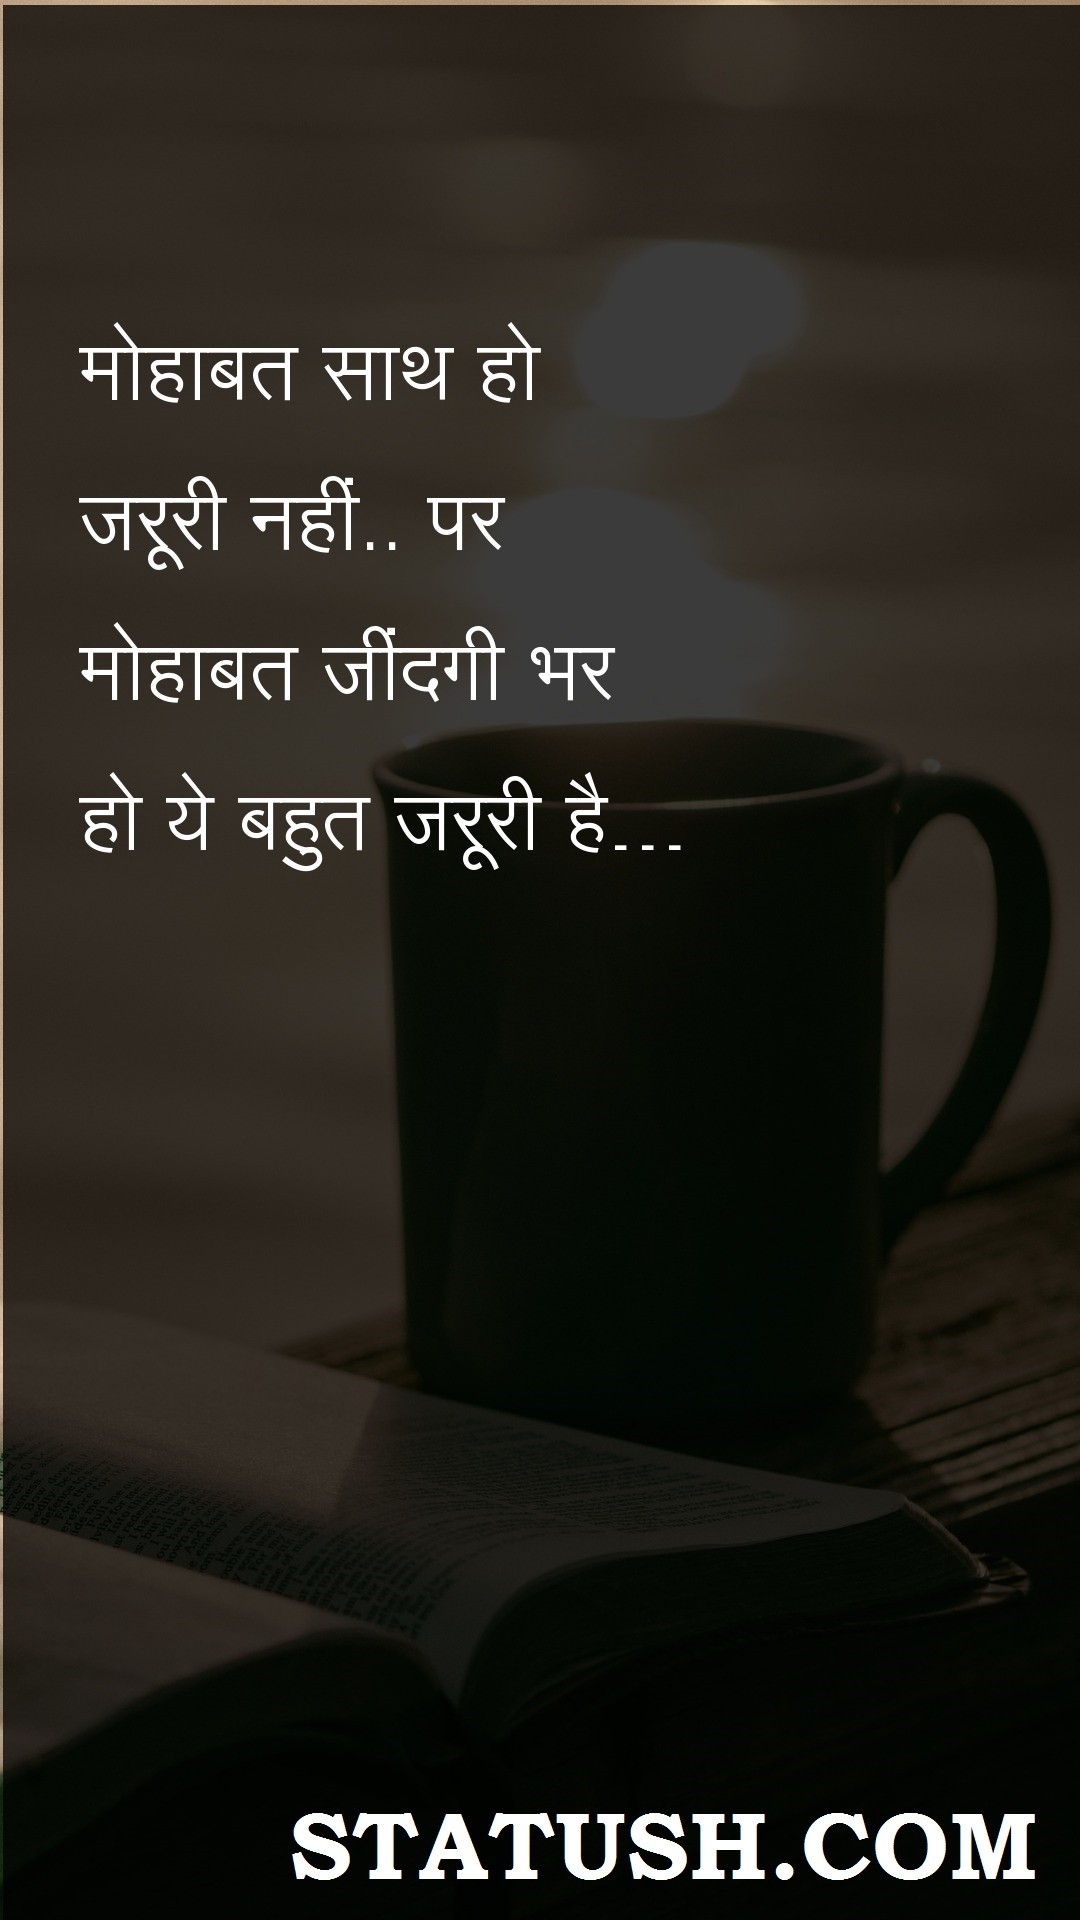 It is not necessary - Hindi Quotes at statush.com